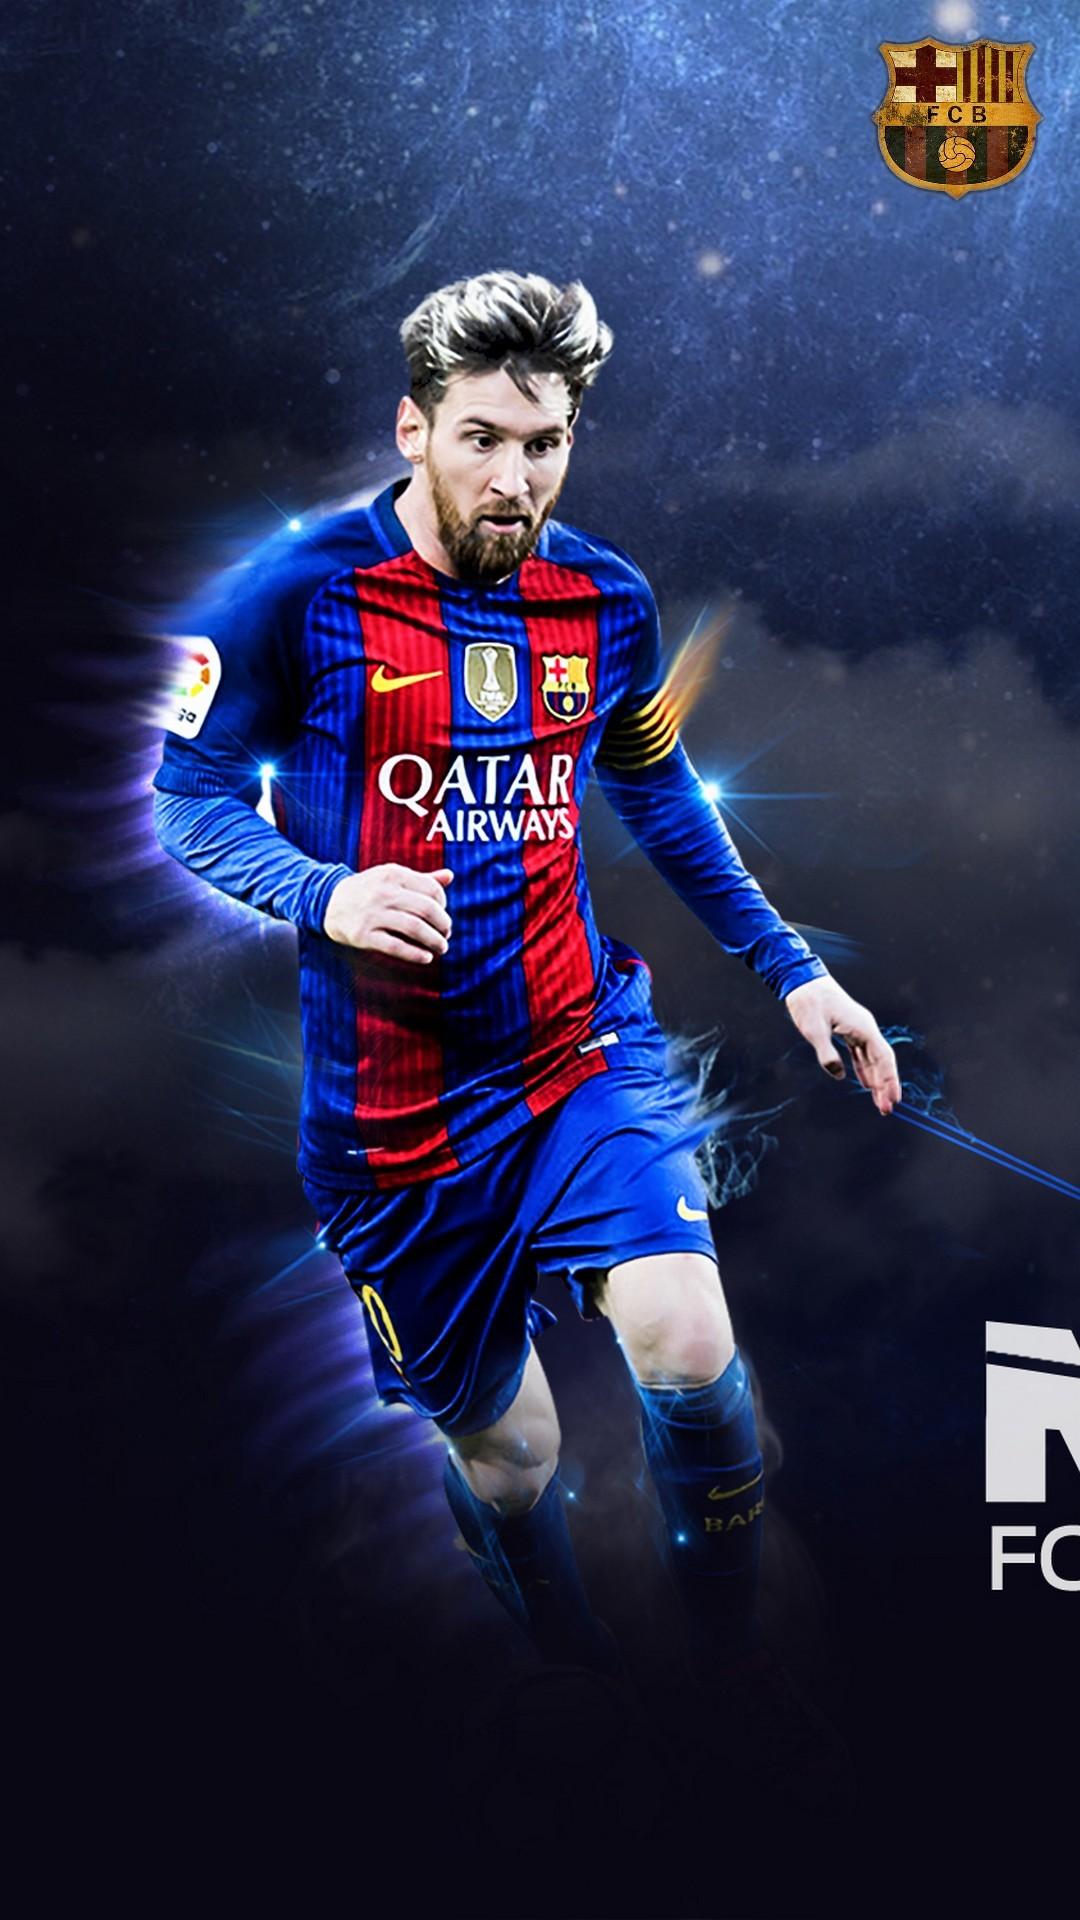 Messi Football King IPhone Wallpaper HD  IPhone Wallpapers  iPhone  Wallpapers